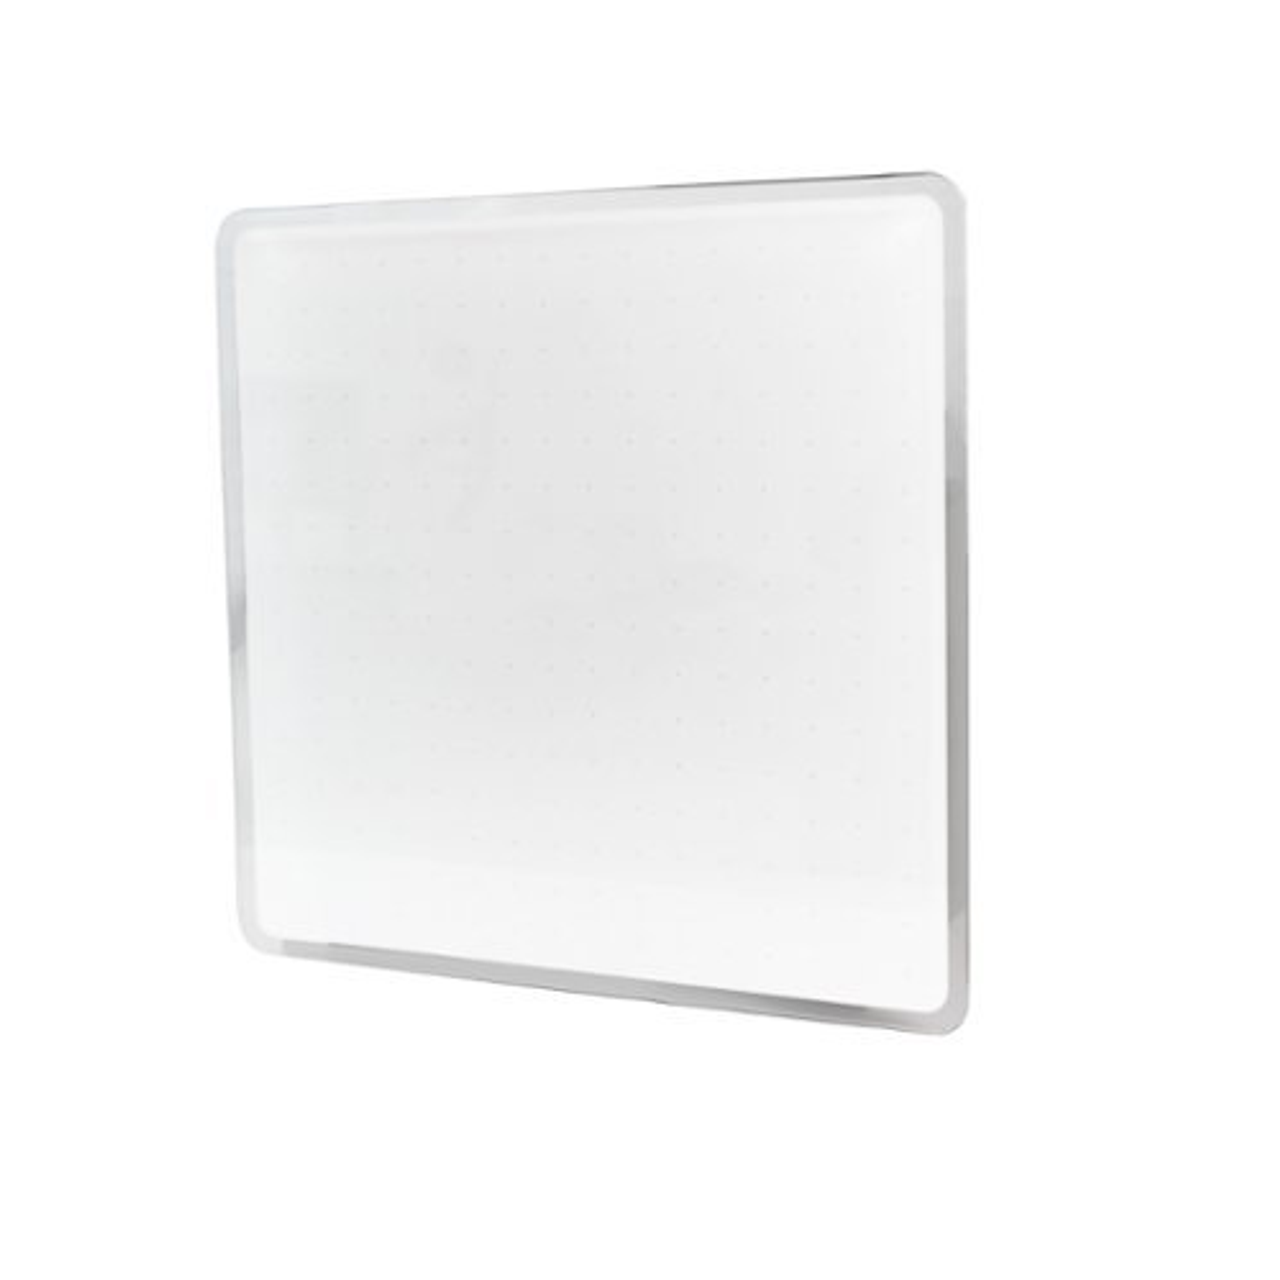 Floortex Glass Magnetic Grid Board 14" x 14" in White - White